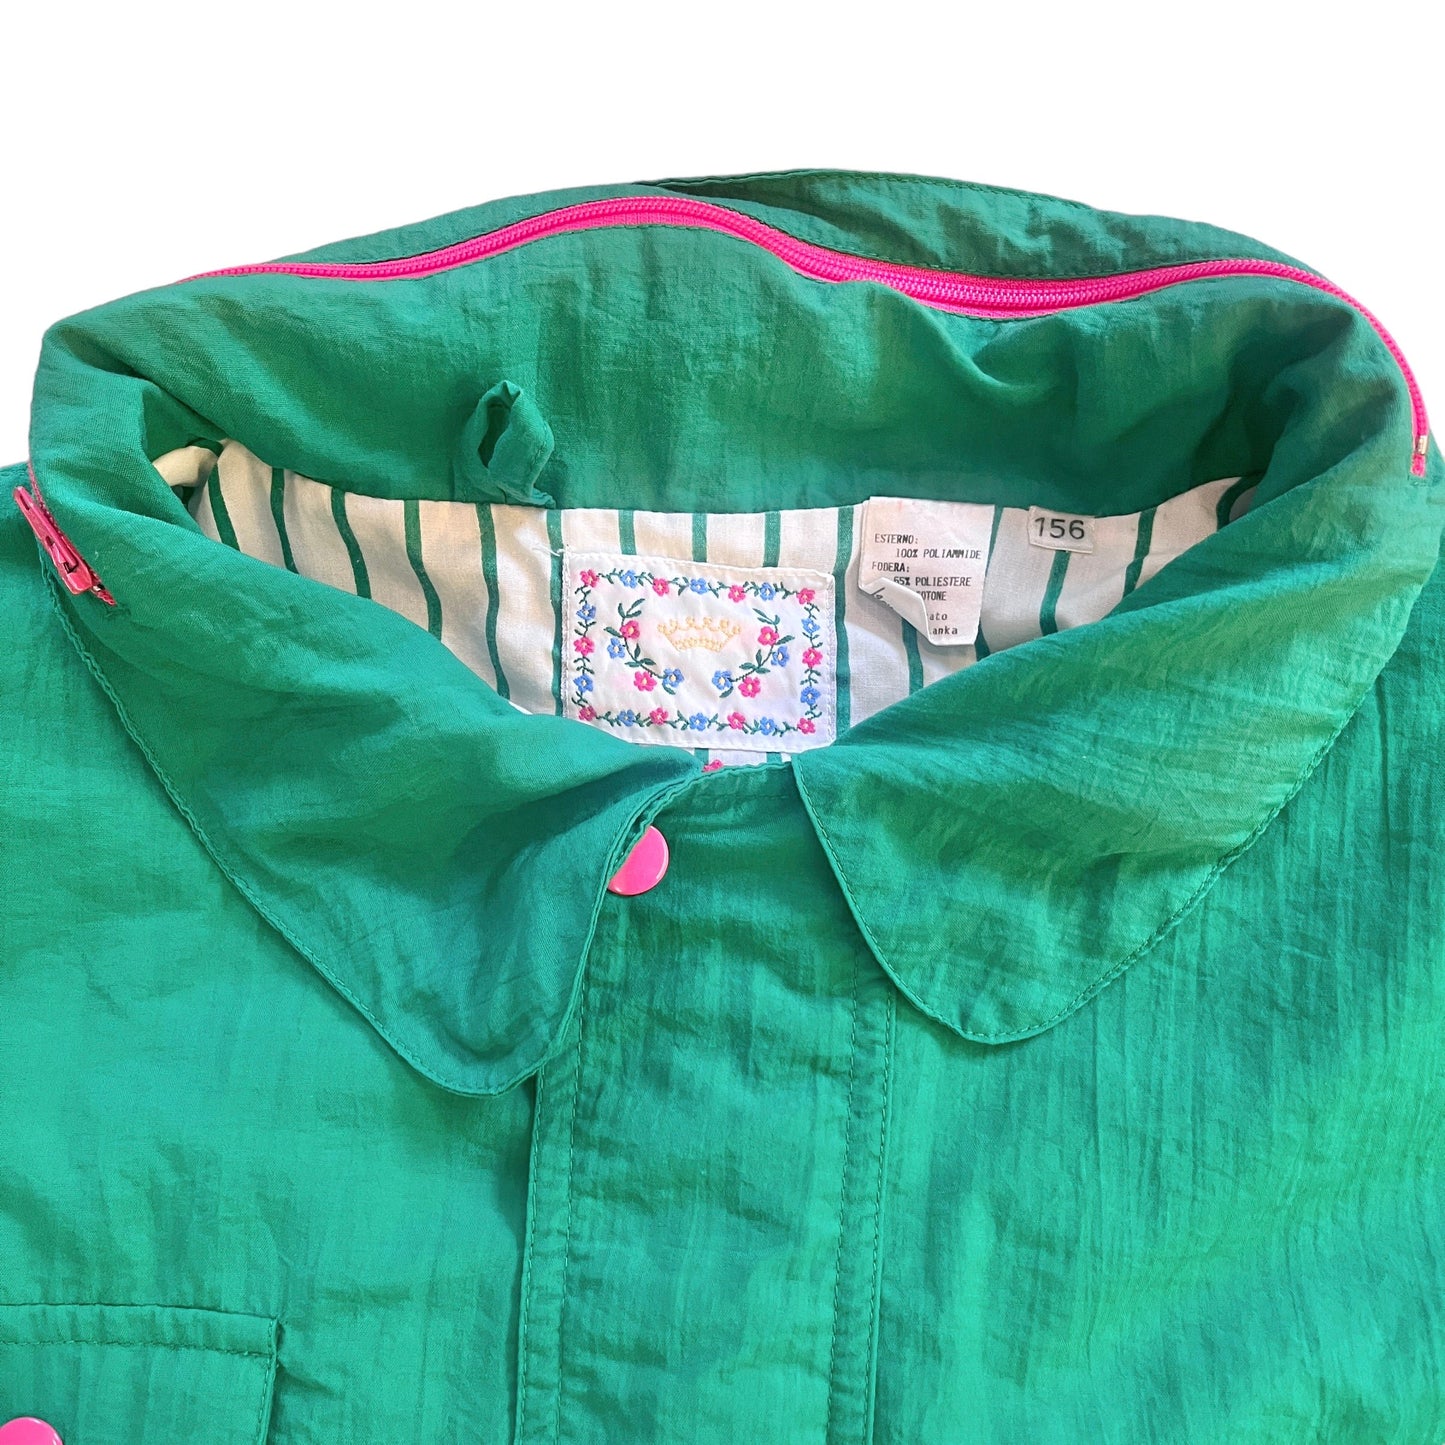 Vintage 1990's Green Jacket Teen /Small